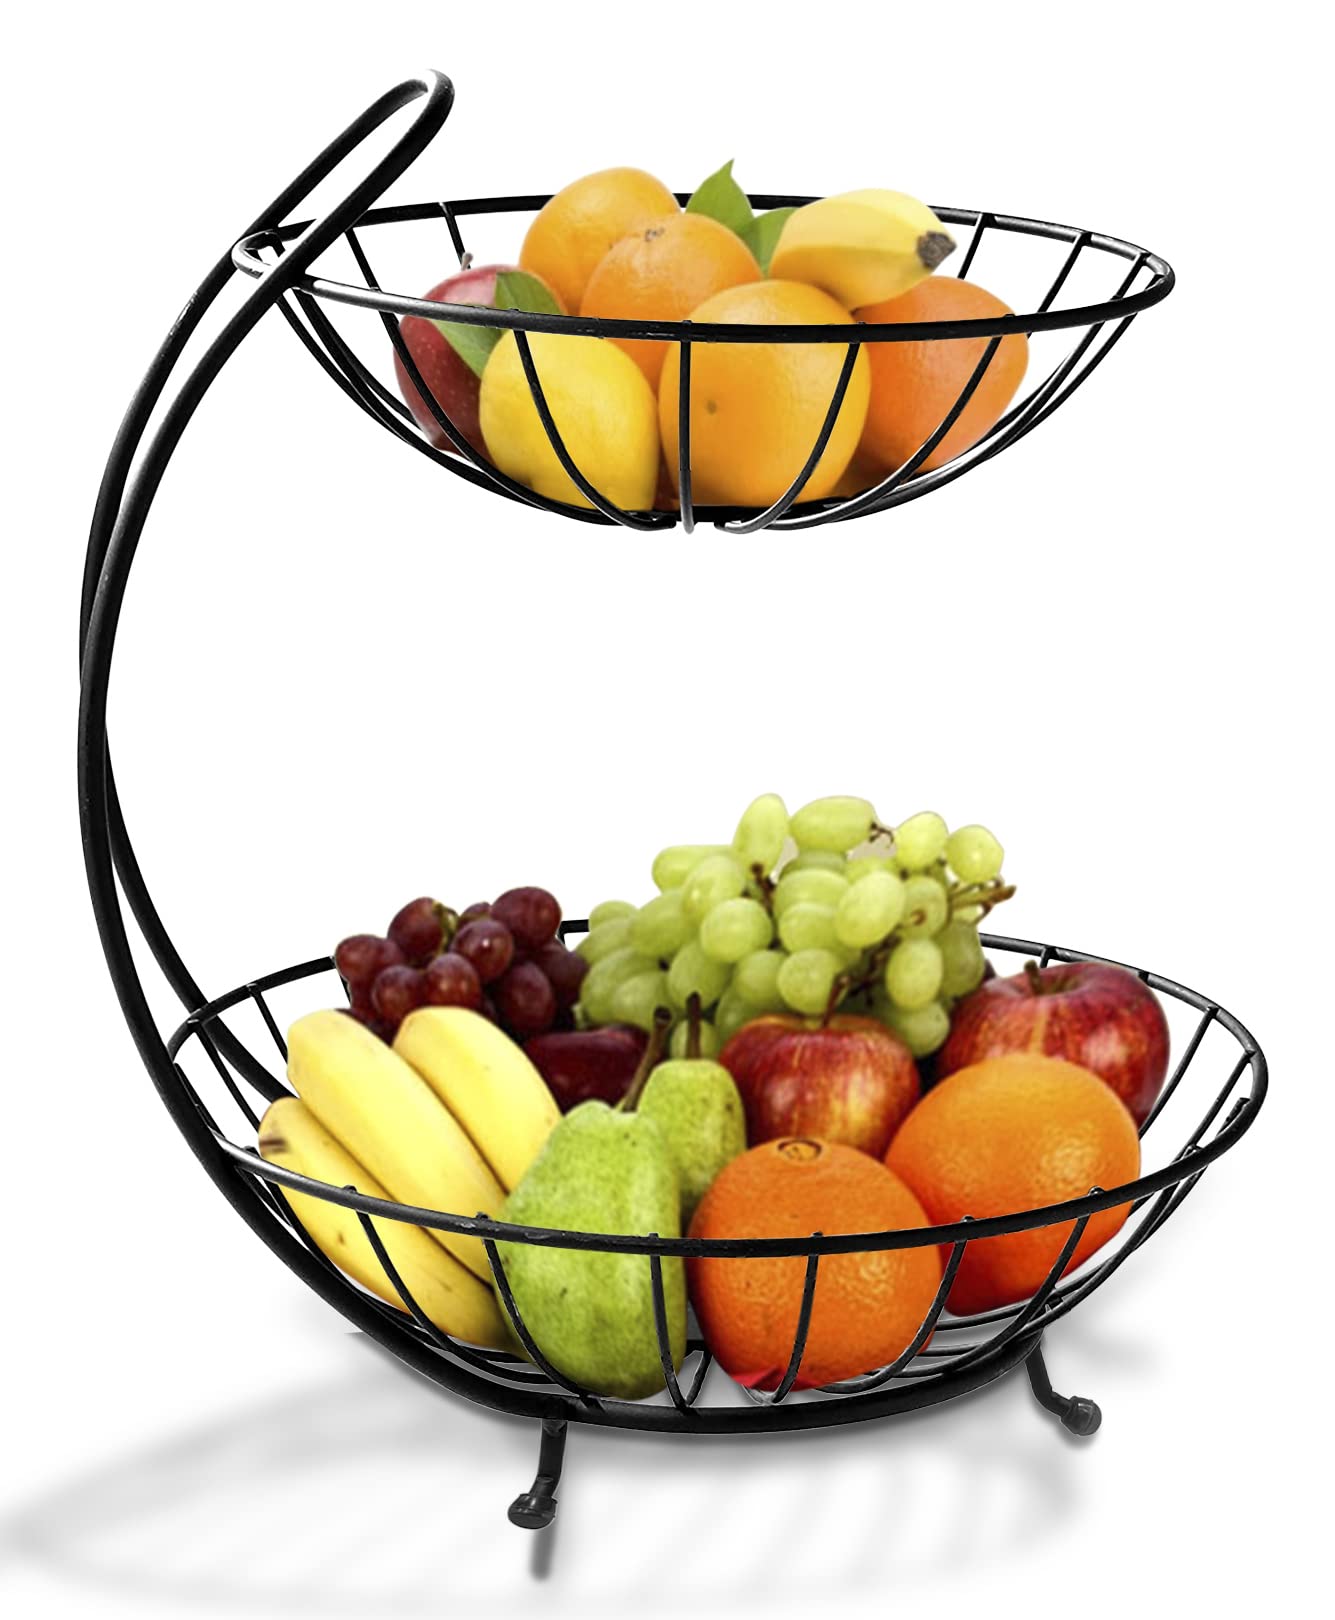 Plantex Heavy Steel 2-Tier Fruit & Vegetable Basket For Dining Table/Kitchen - Countertop (Black), 9 liter